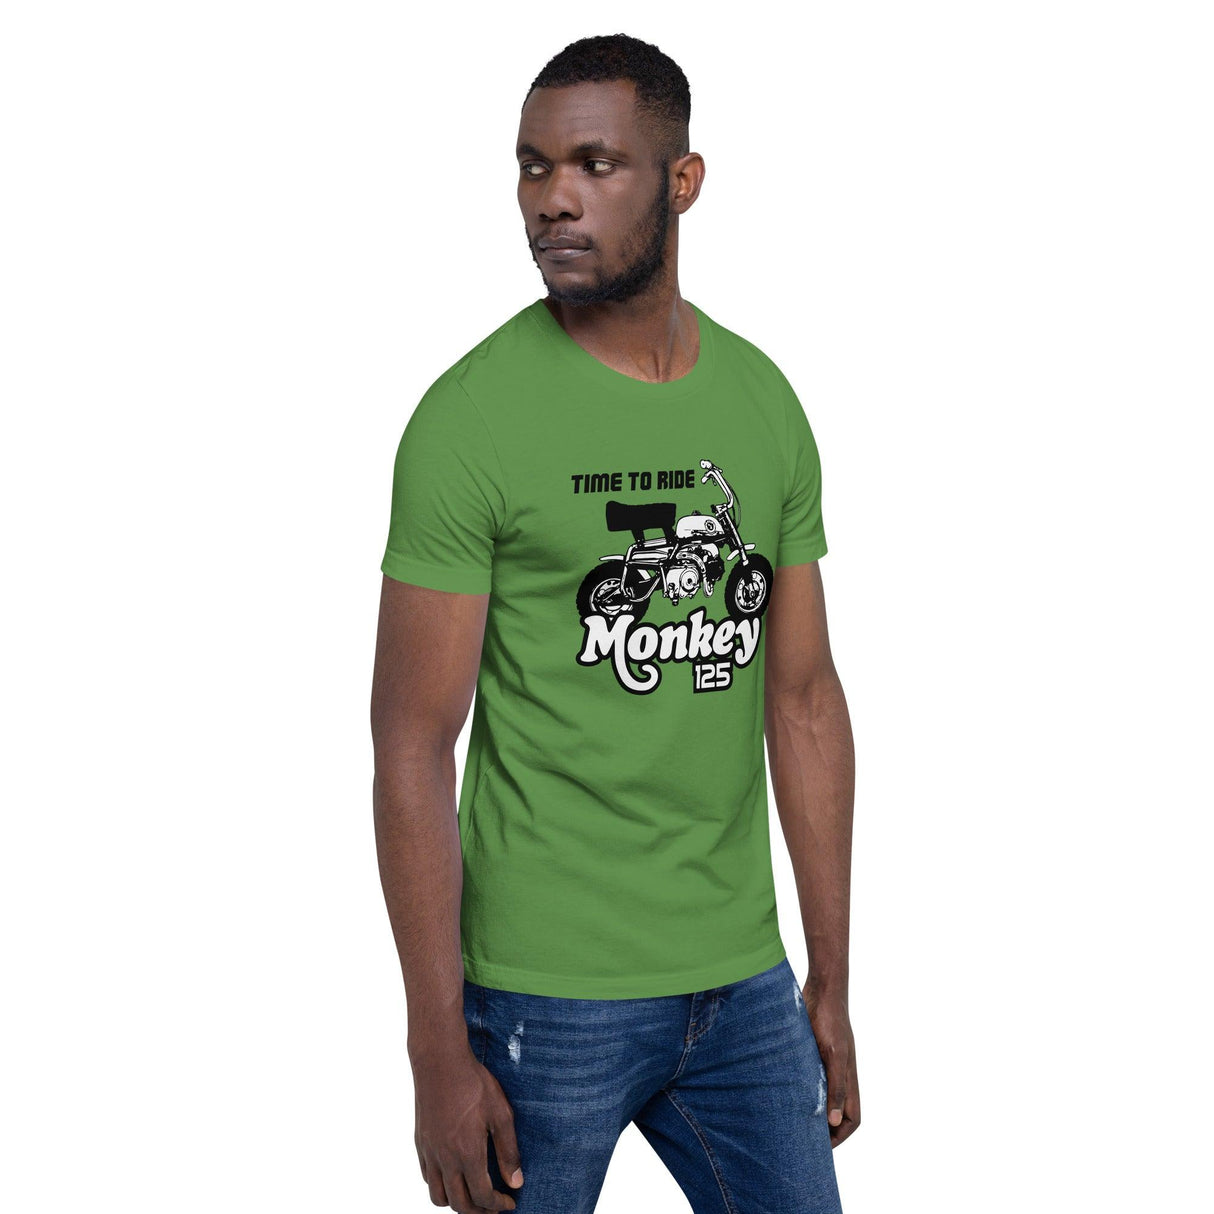 TIME TO RIDE Monkey 125 Graphic Printed Round Neck Short Sleeves Unisex T-Shirt - StickerBao Wheel Sticker Store